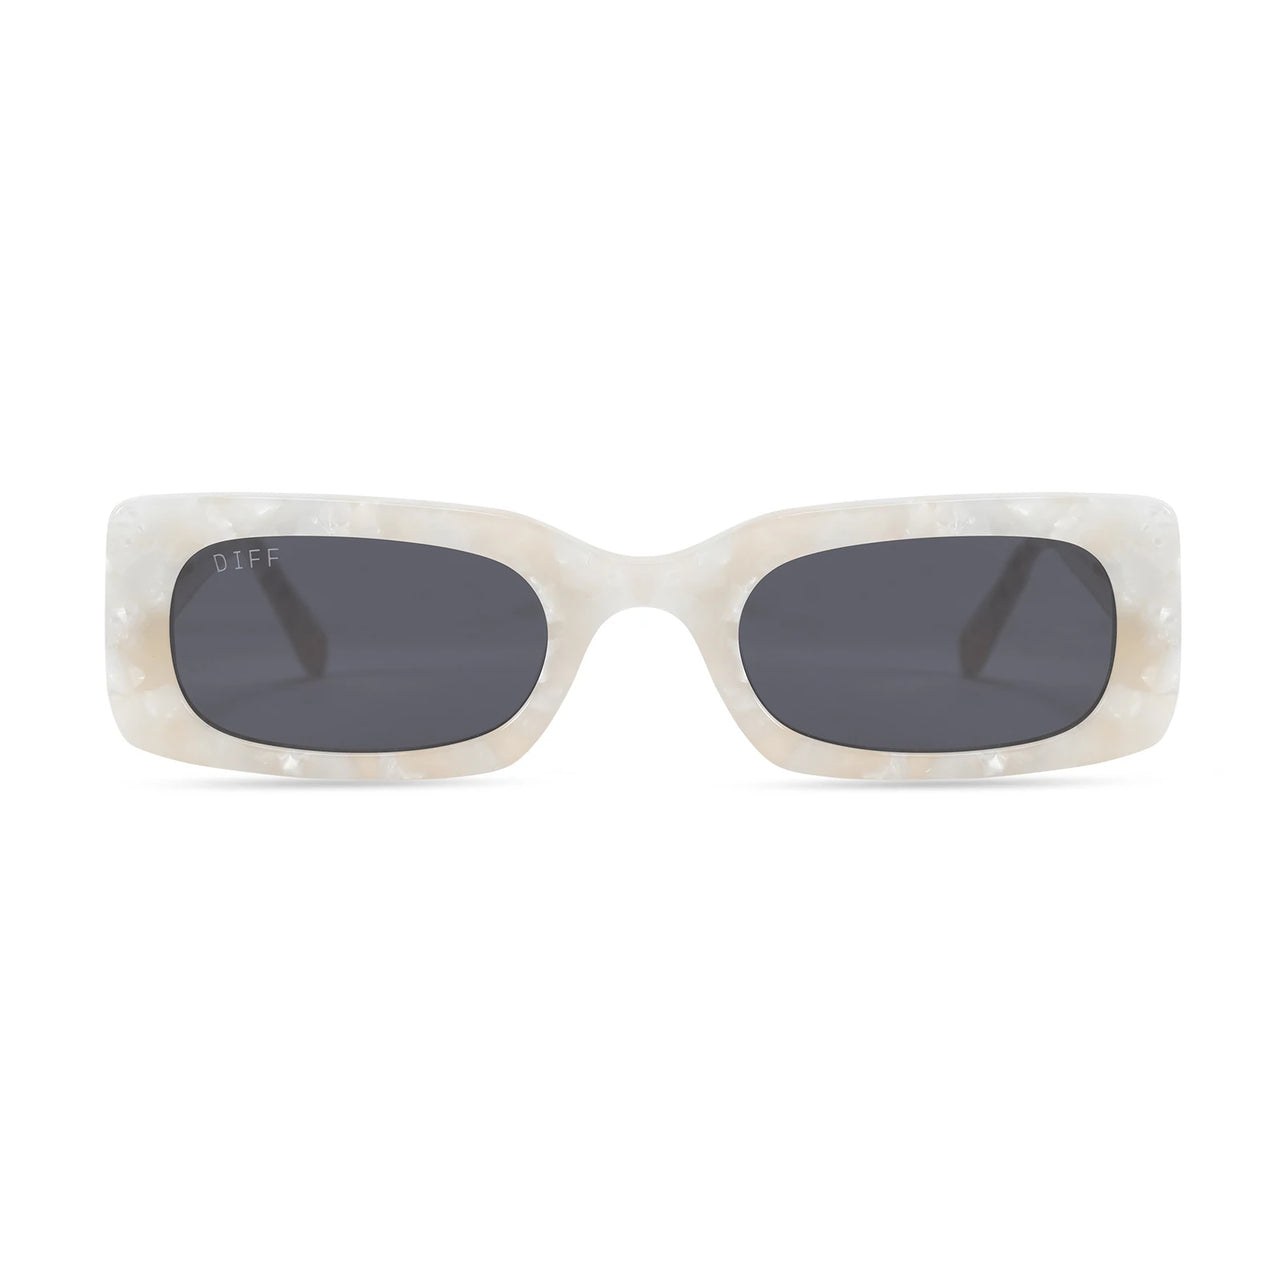 DIFF Lotus Locs White Pearl Grey Sunglasses